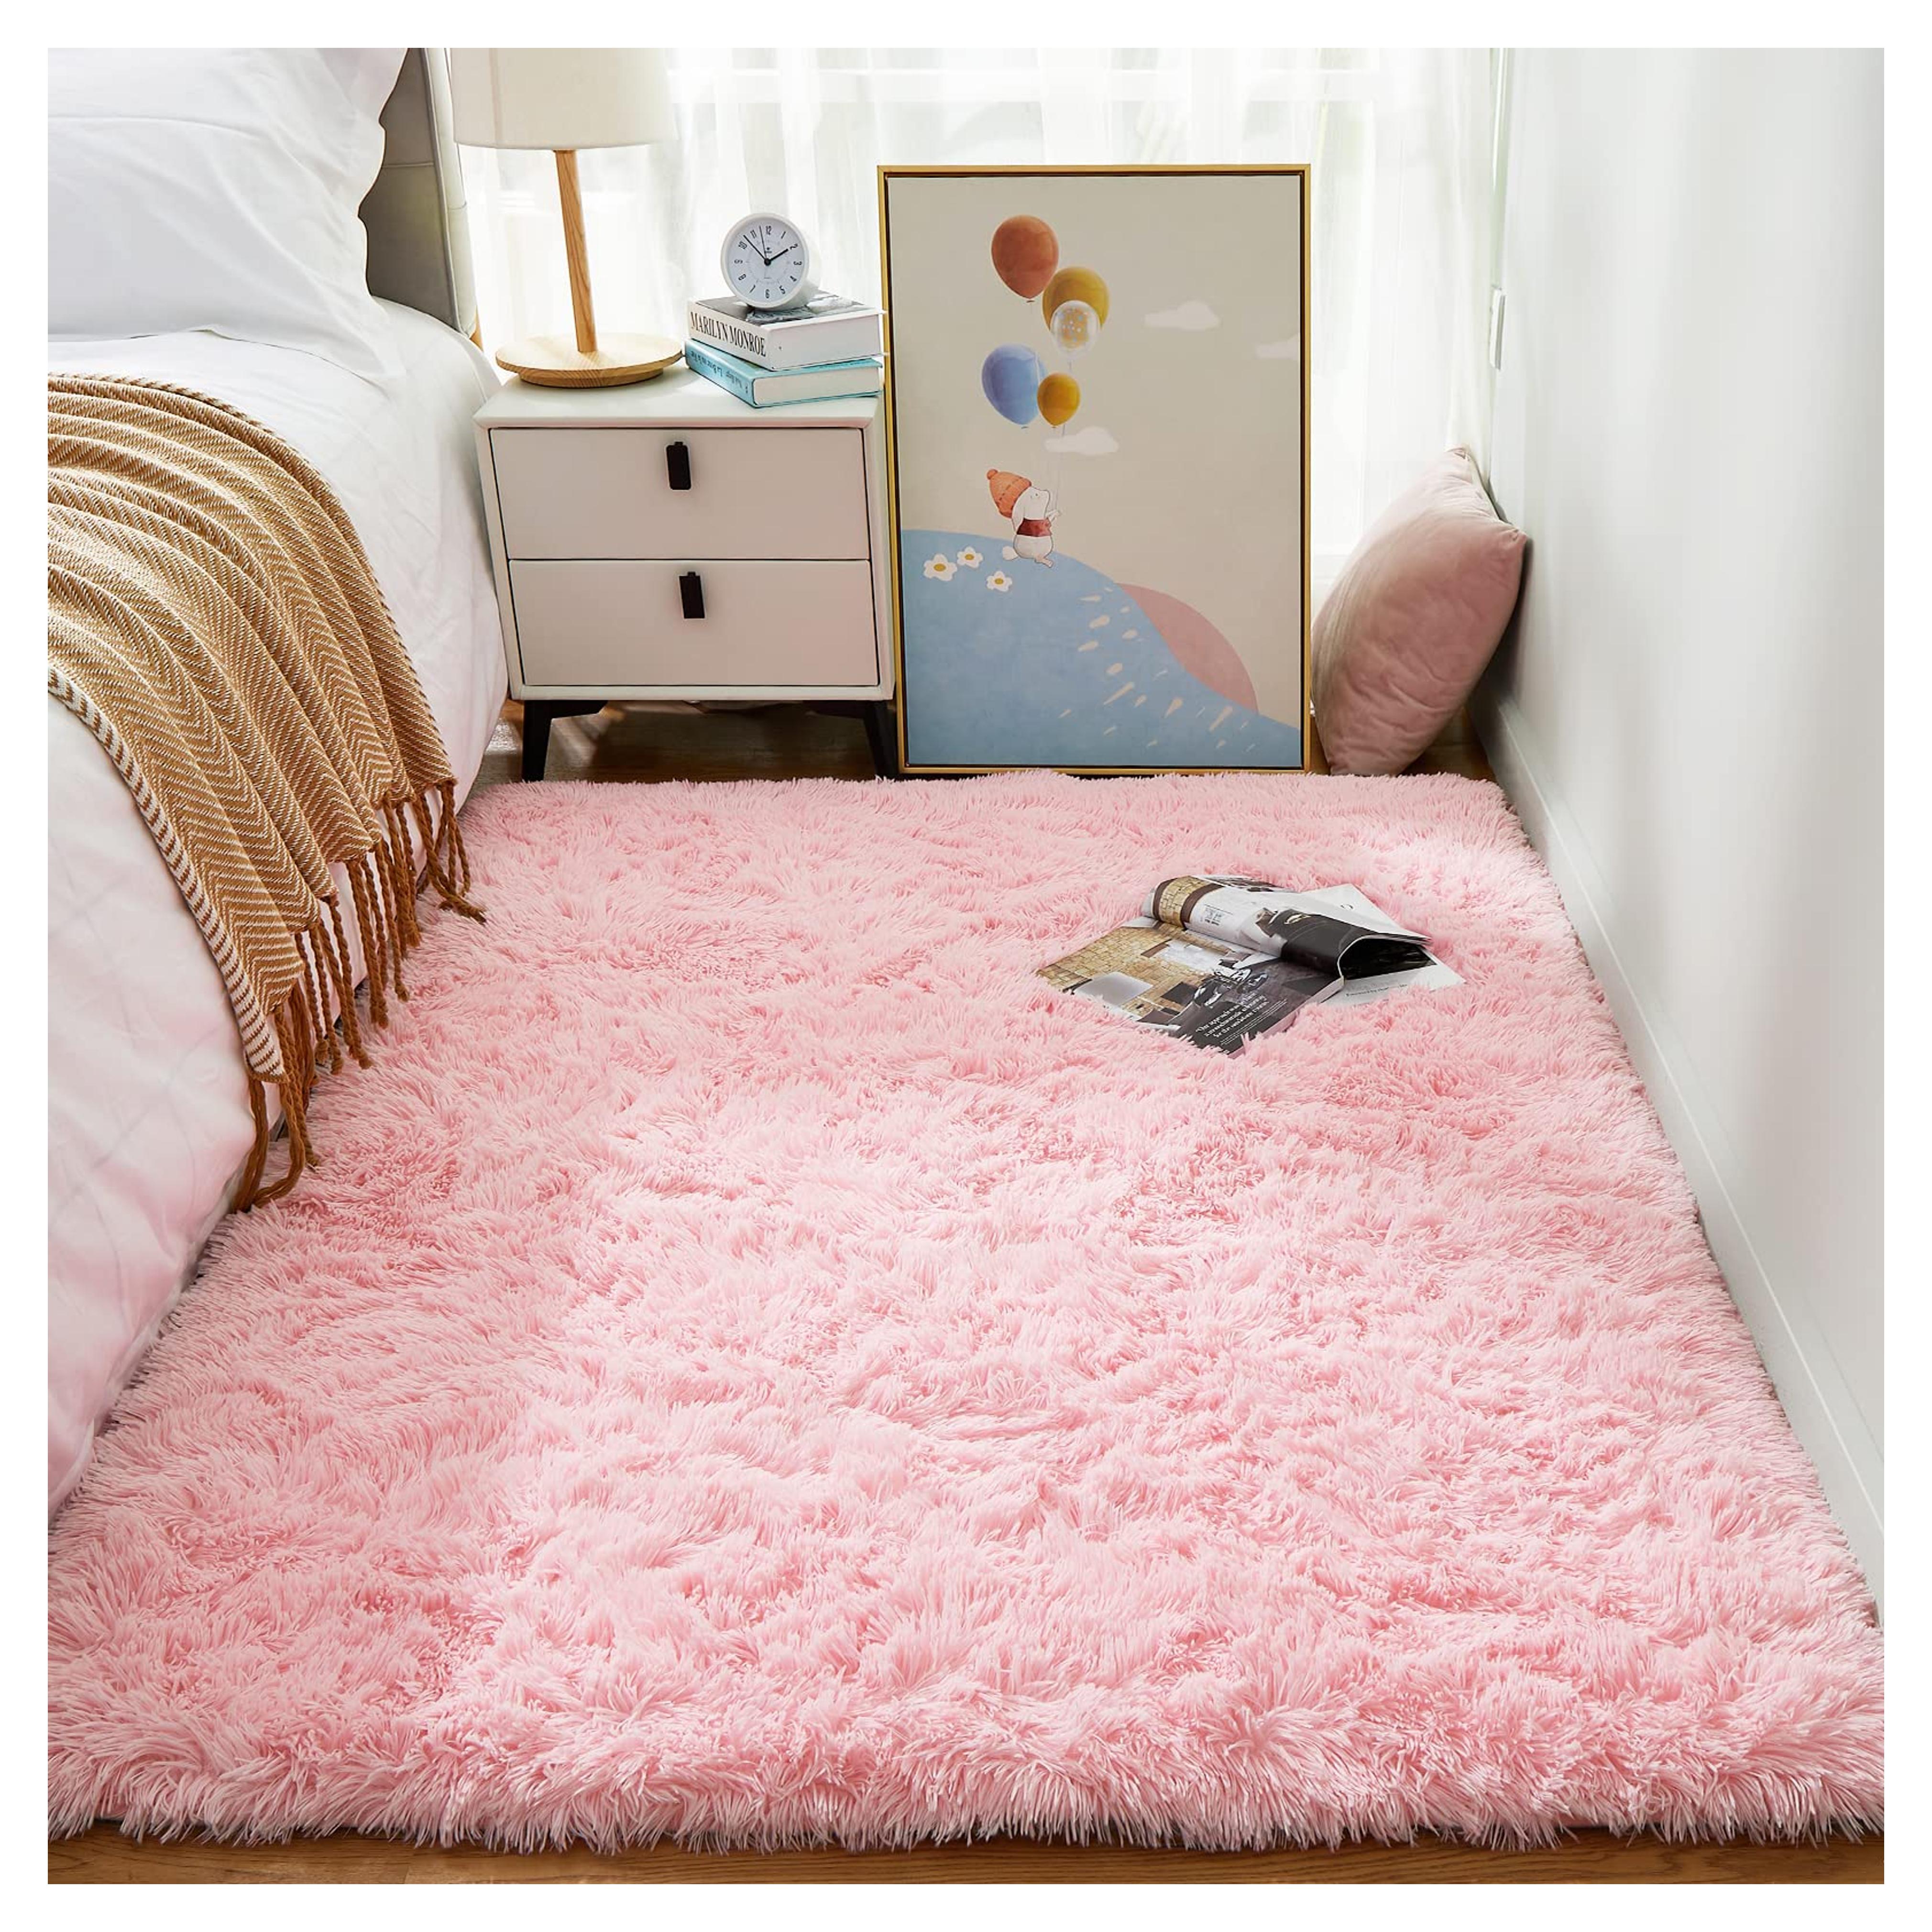 Amazon.com: Ophanie Pink Rugs for Bedroom Girls, Kids Baby Shaggy Fluffy Cute Shag Fuzzy Soft Room Carpet, Plush Bedside Indoor Floor Area Rug for Teen Dorm Home Decor Aesthetic, Nursery, 4 x 5.3 Feet : Home & Kitchen